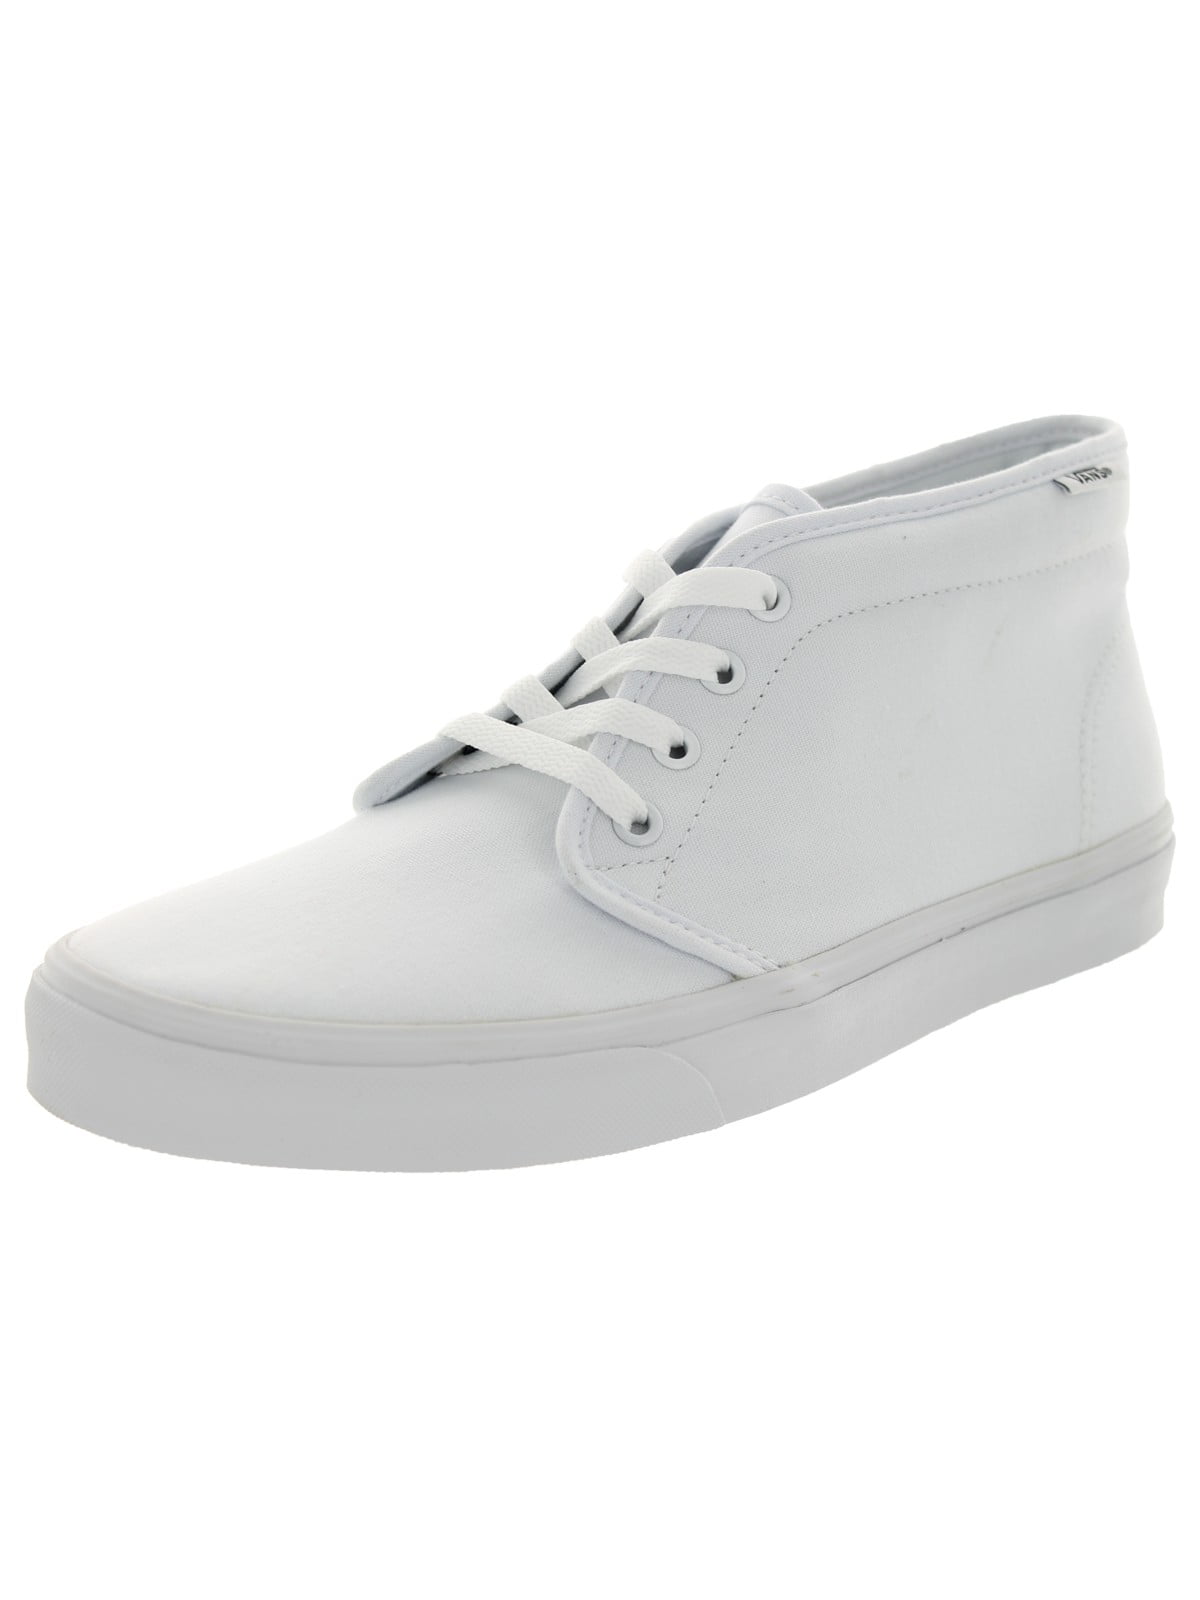 white canvas sneakers walmart